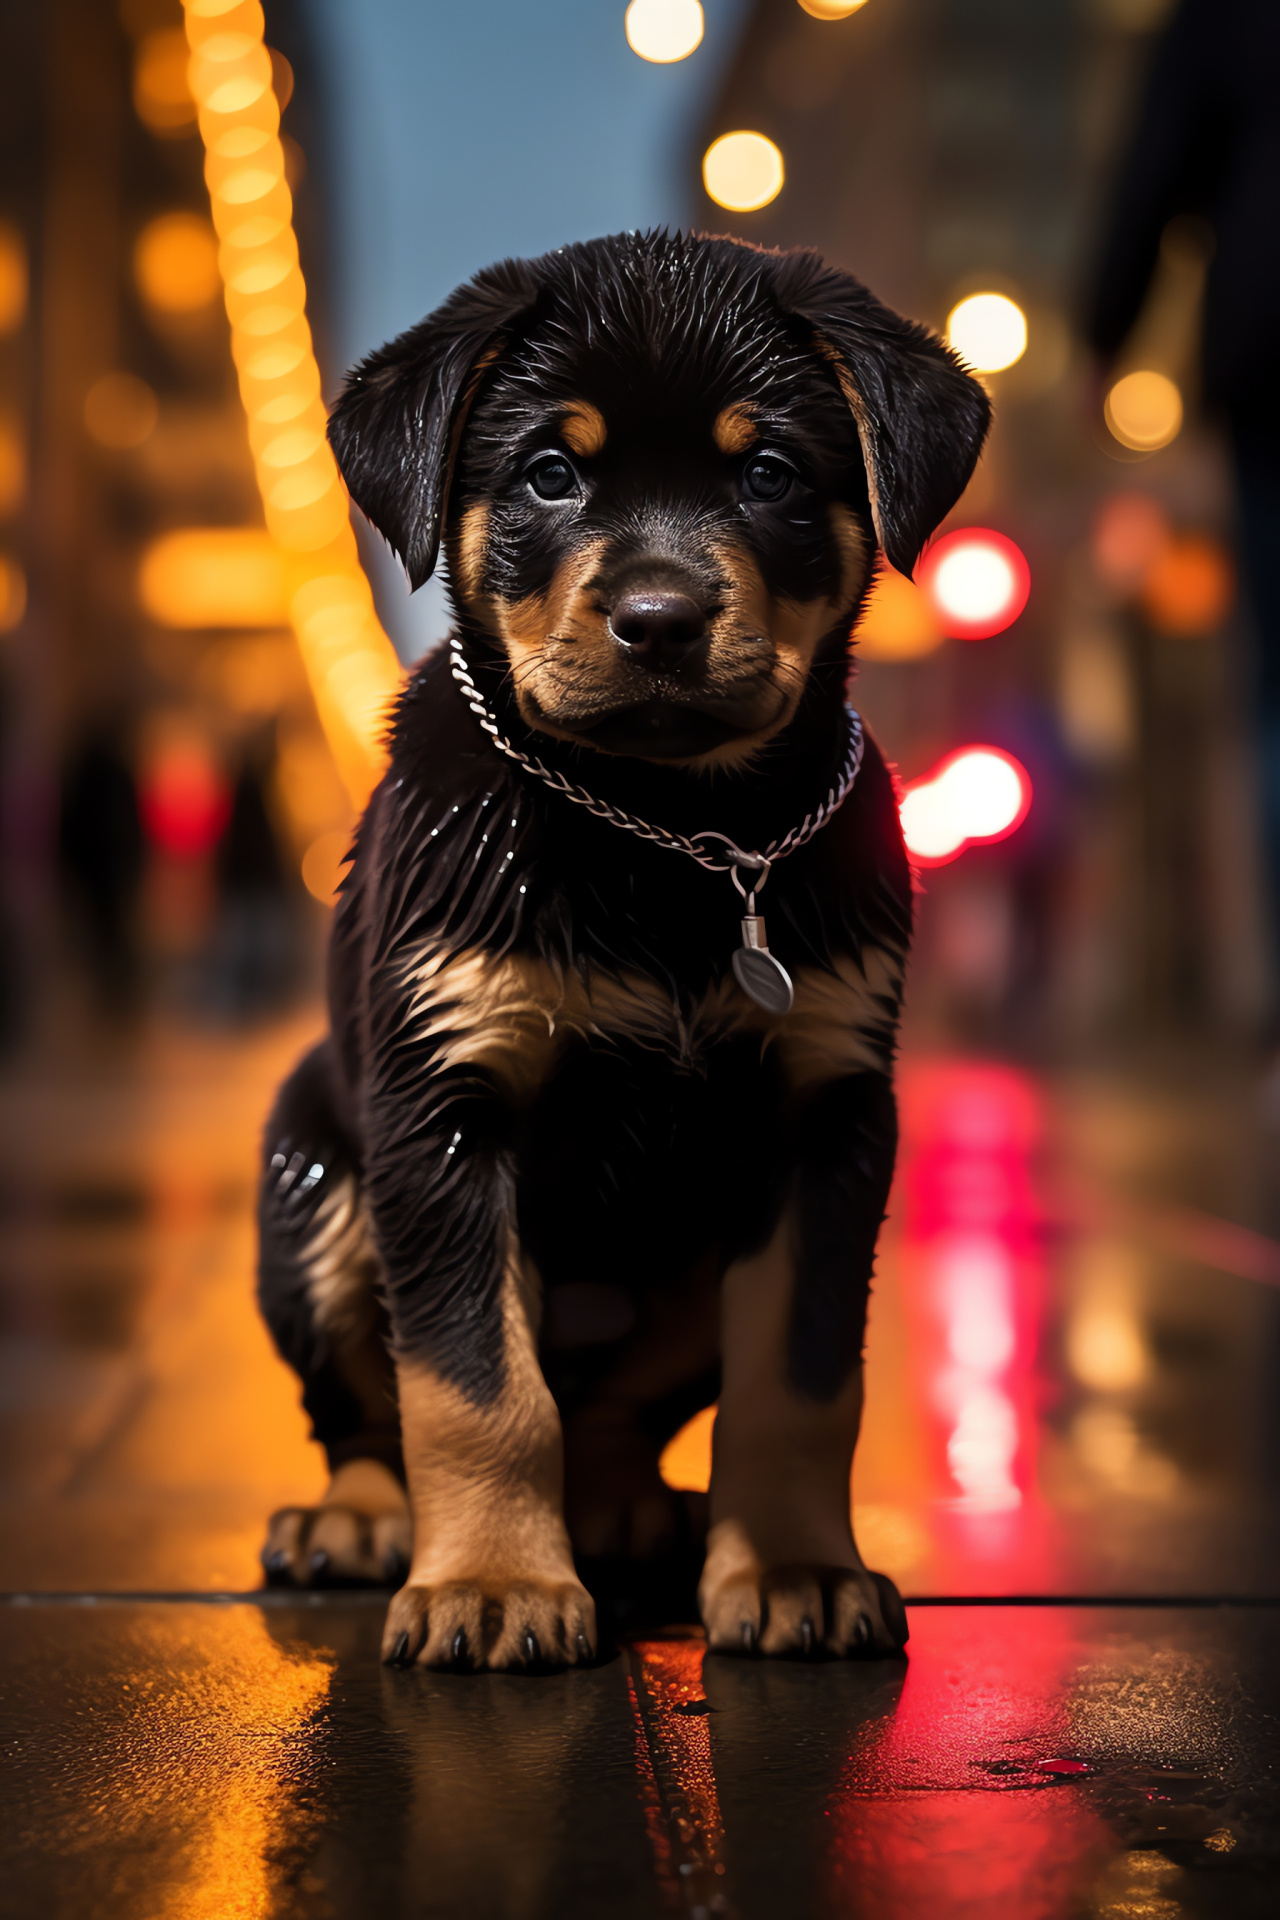 Rottweiler pup city, Canine alert eyes, Puppy black fur, Rottweiler confident stance, Urban pet scene, HD Phone Image